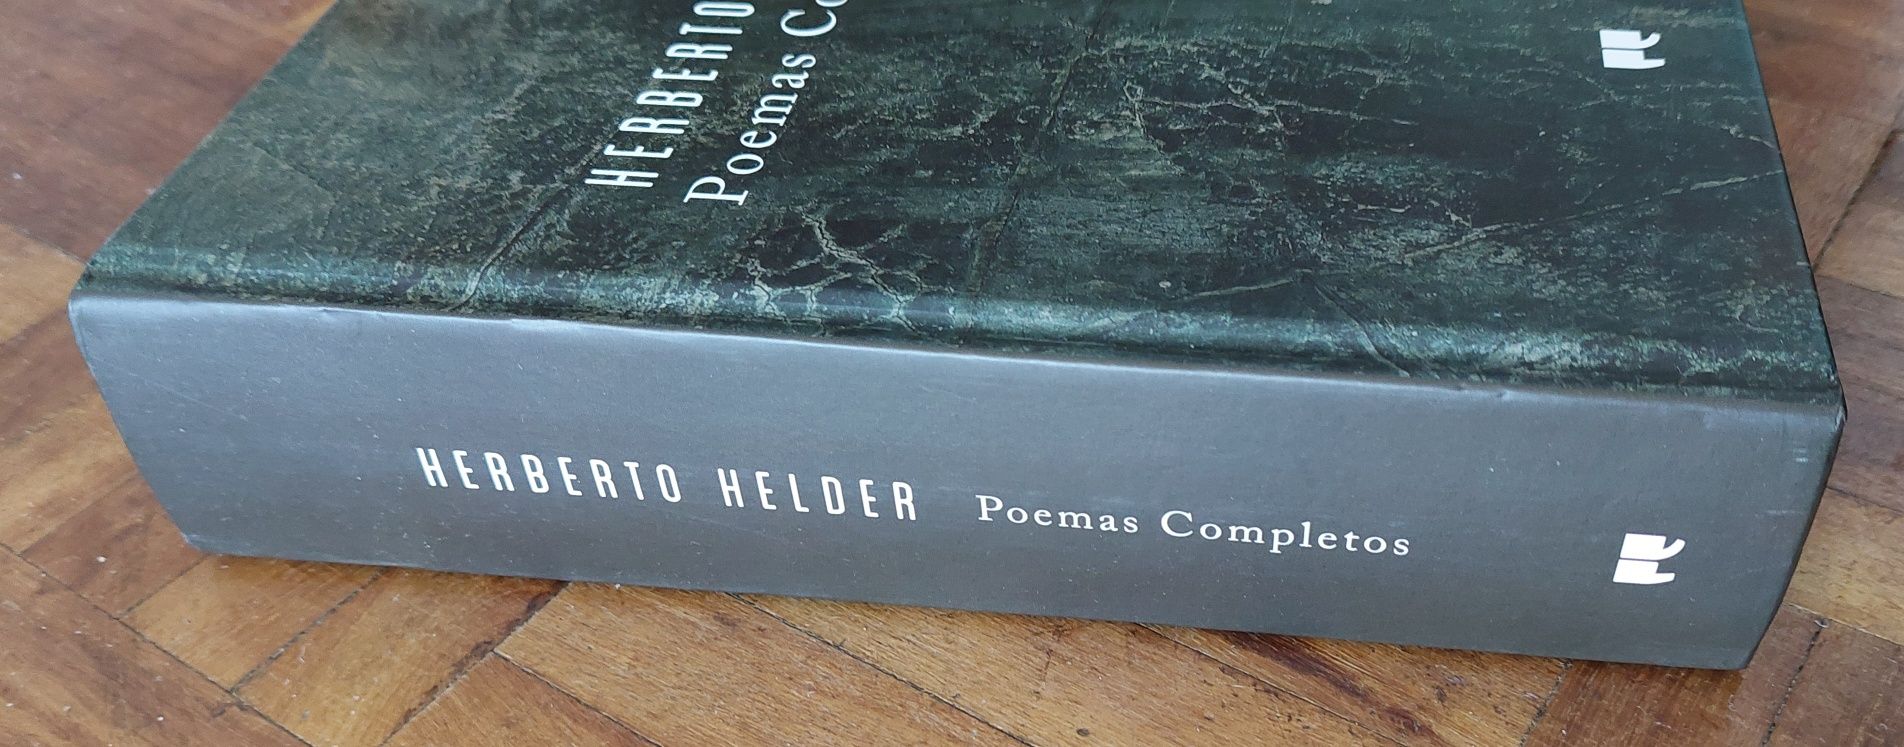 Poemas Completos - Herberto Helder